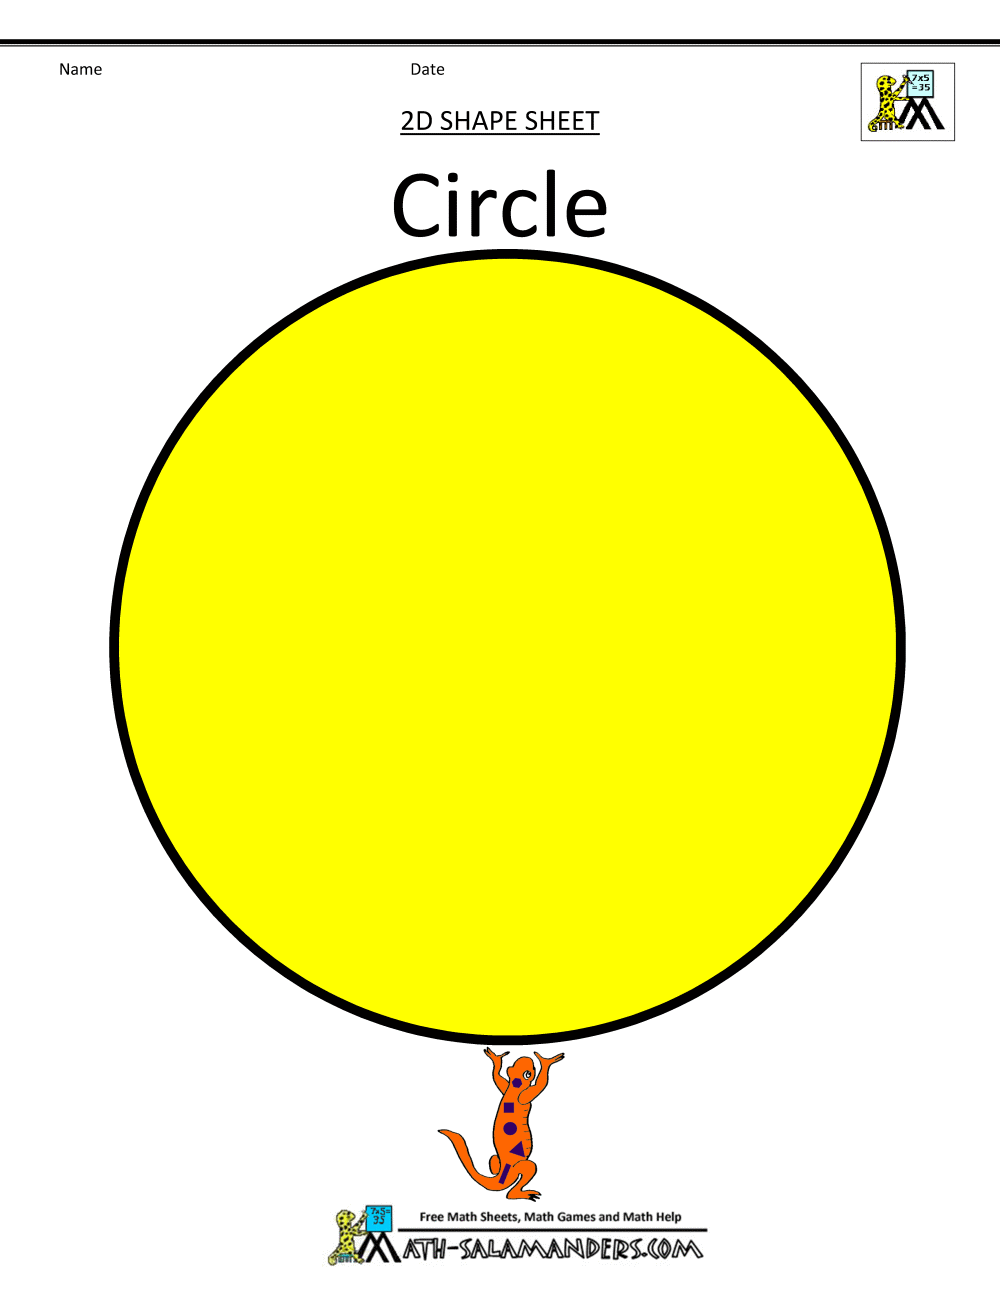 circle shape clipart - photo #37